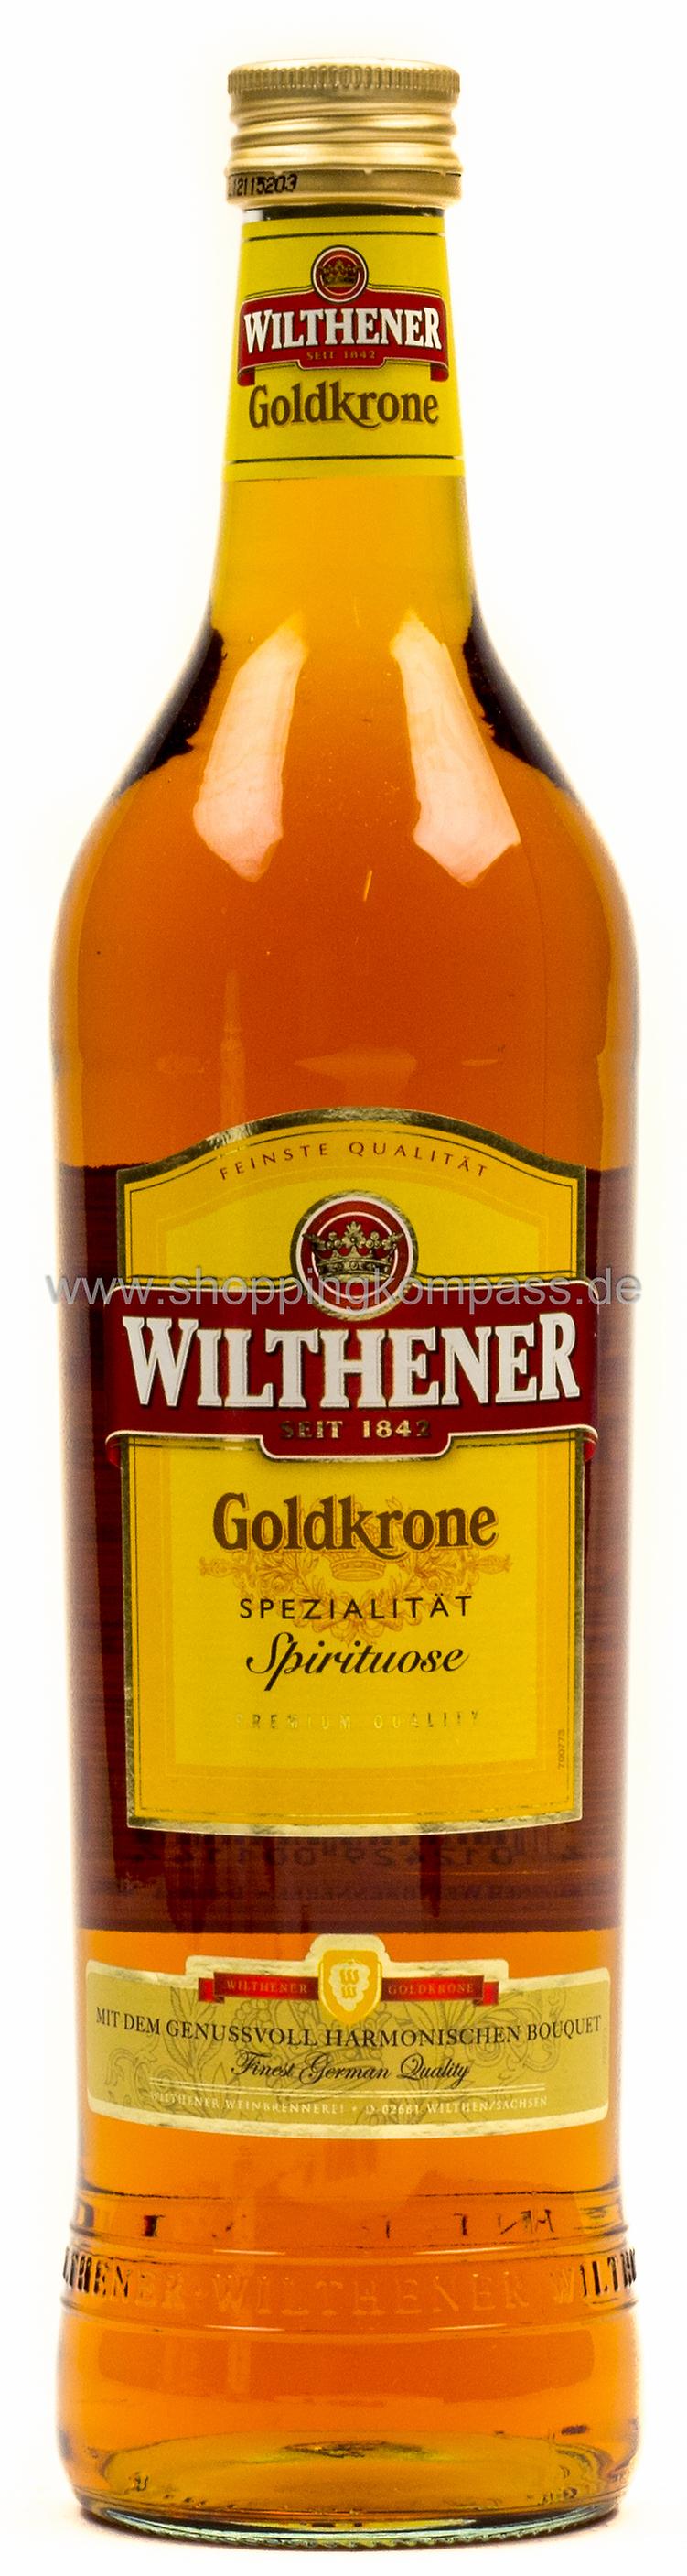 Wilthener Goldkrone 0,7 l Glas